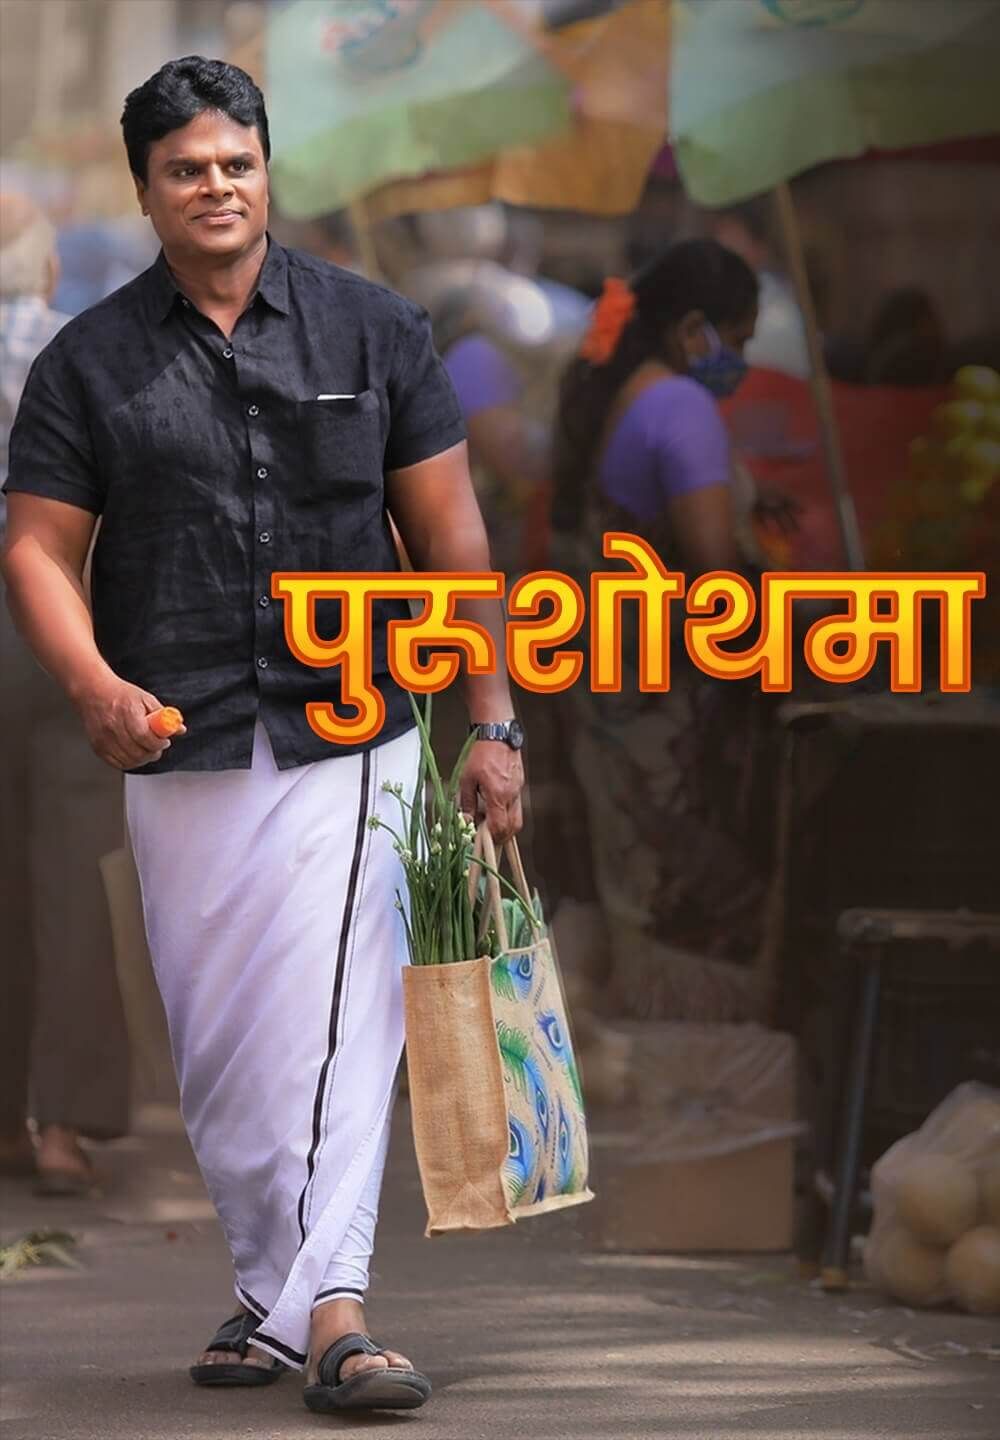 Purushothama (2022) Hindi Dubbed HDRip download full movie